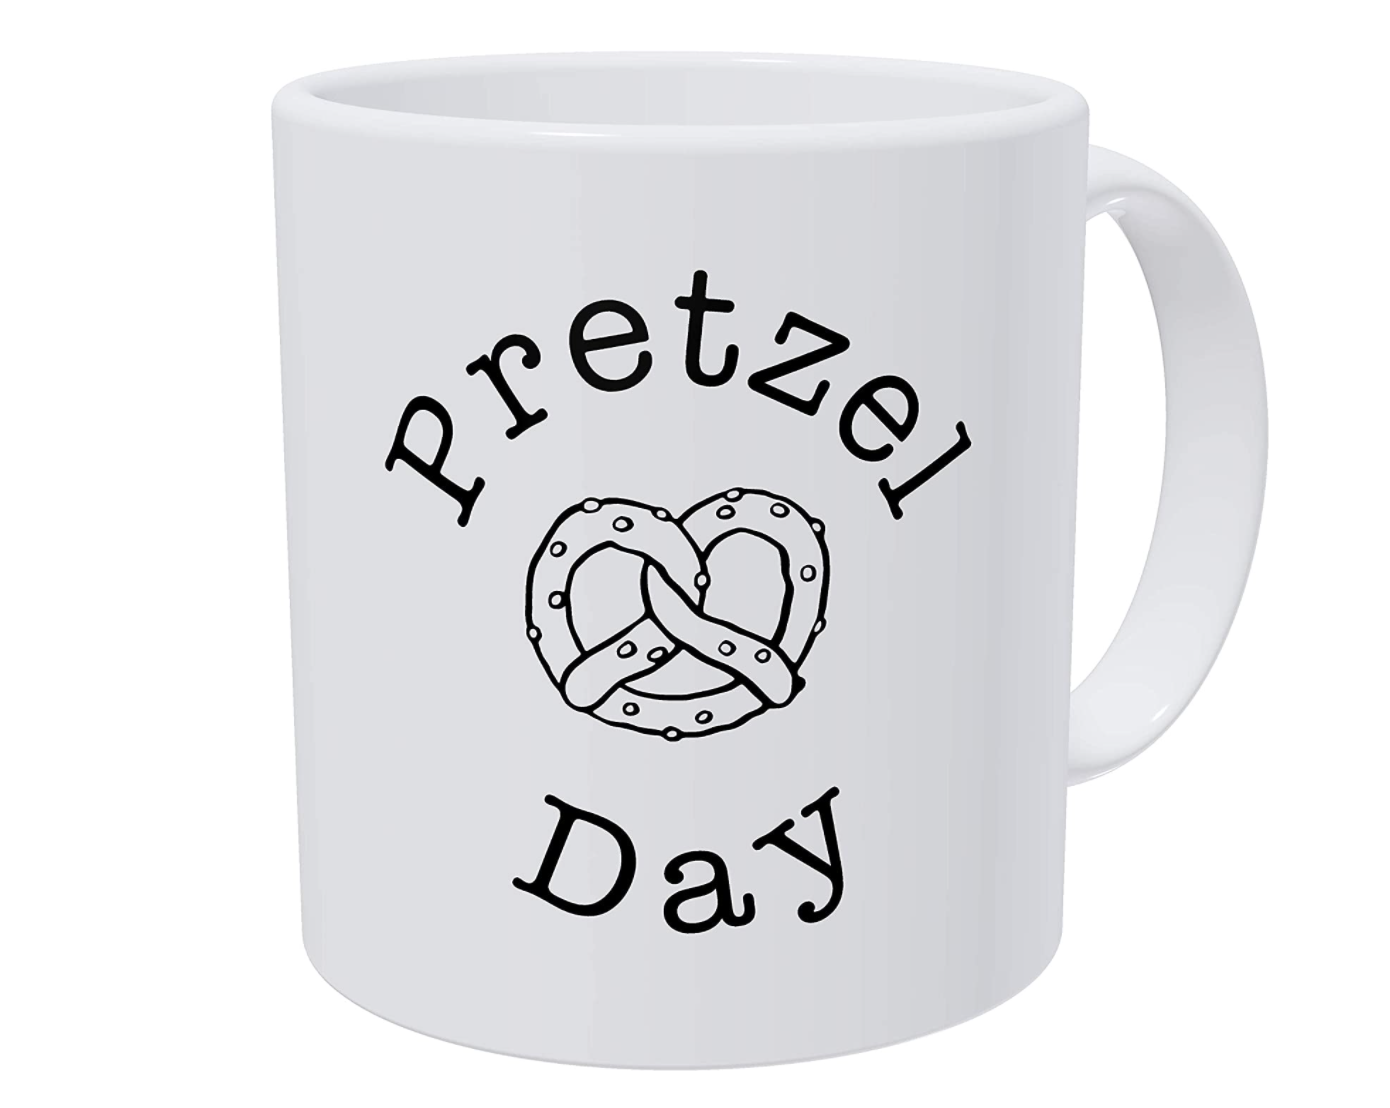 Pretzel Day Mug